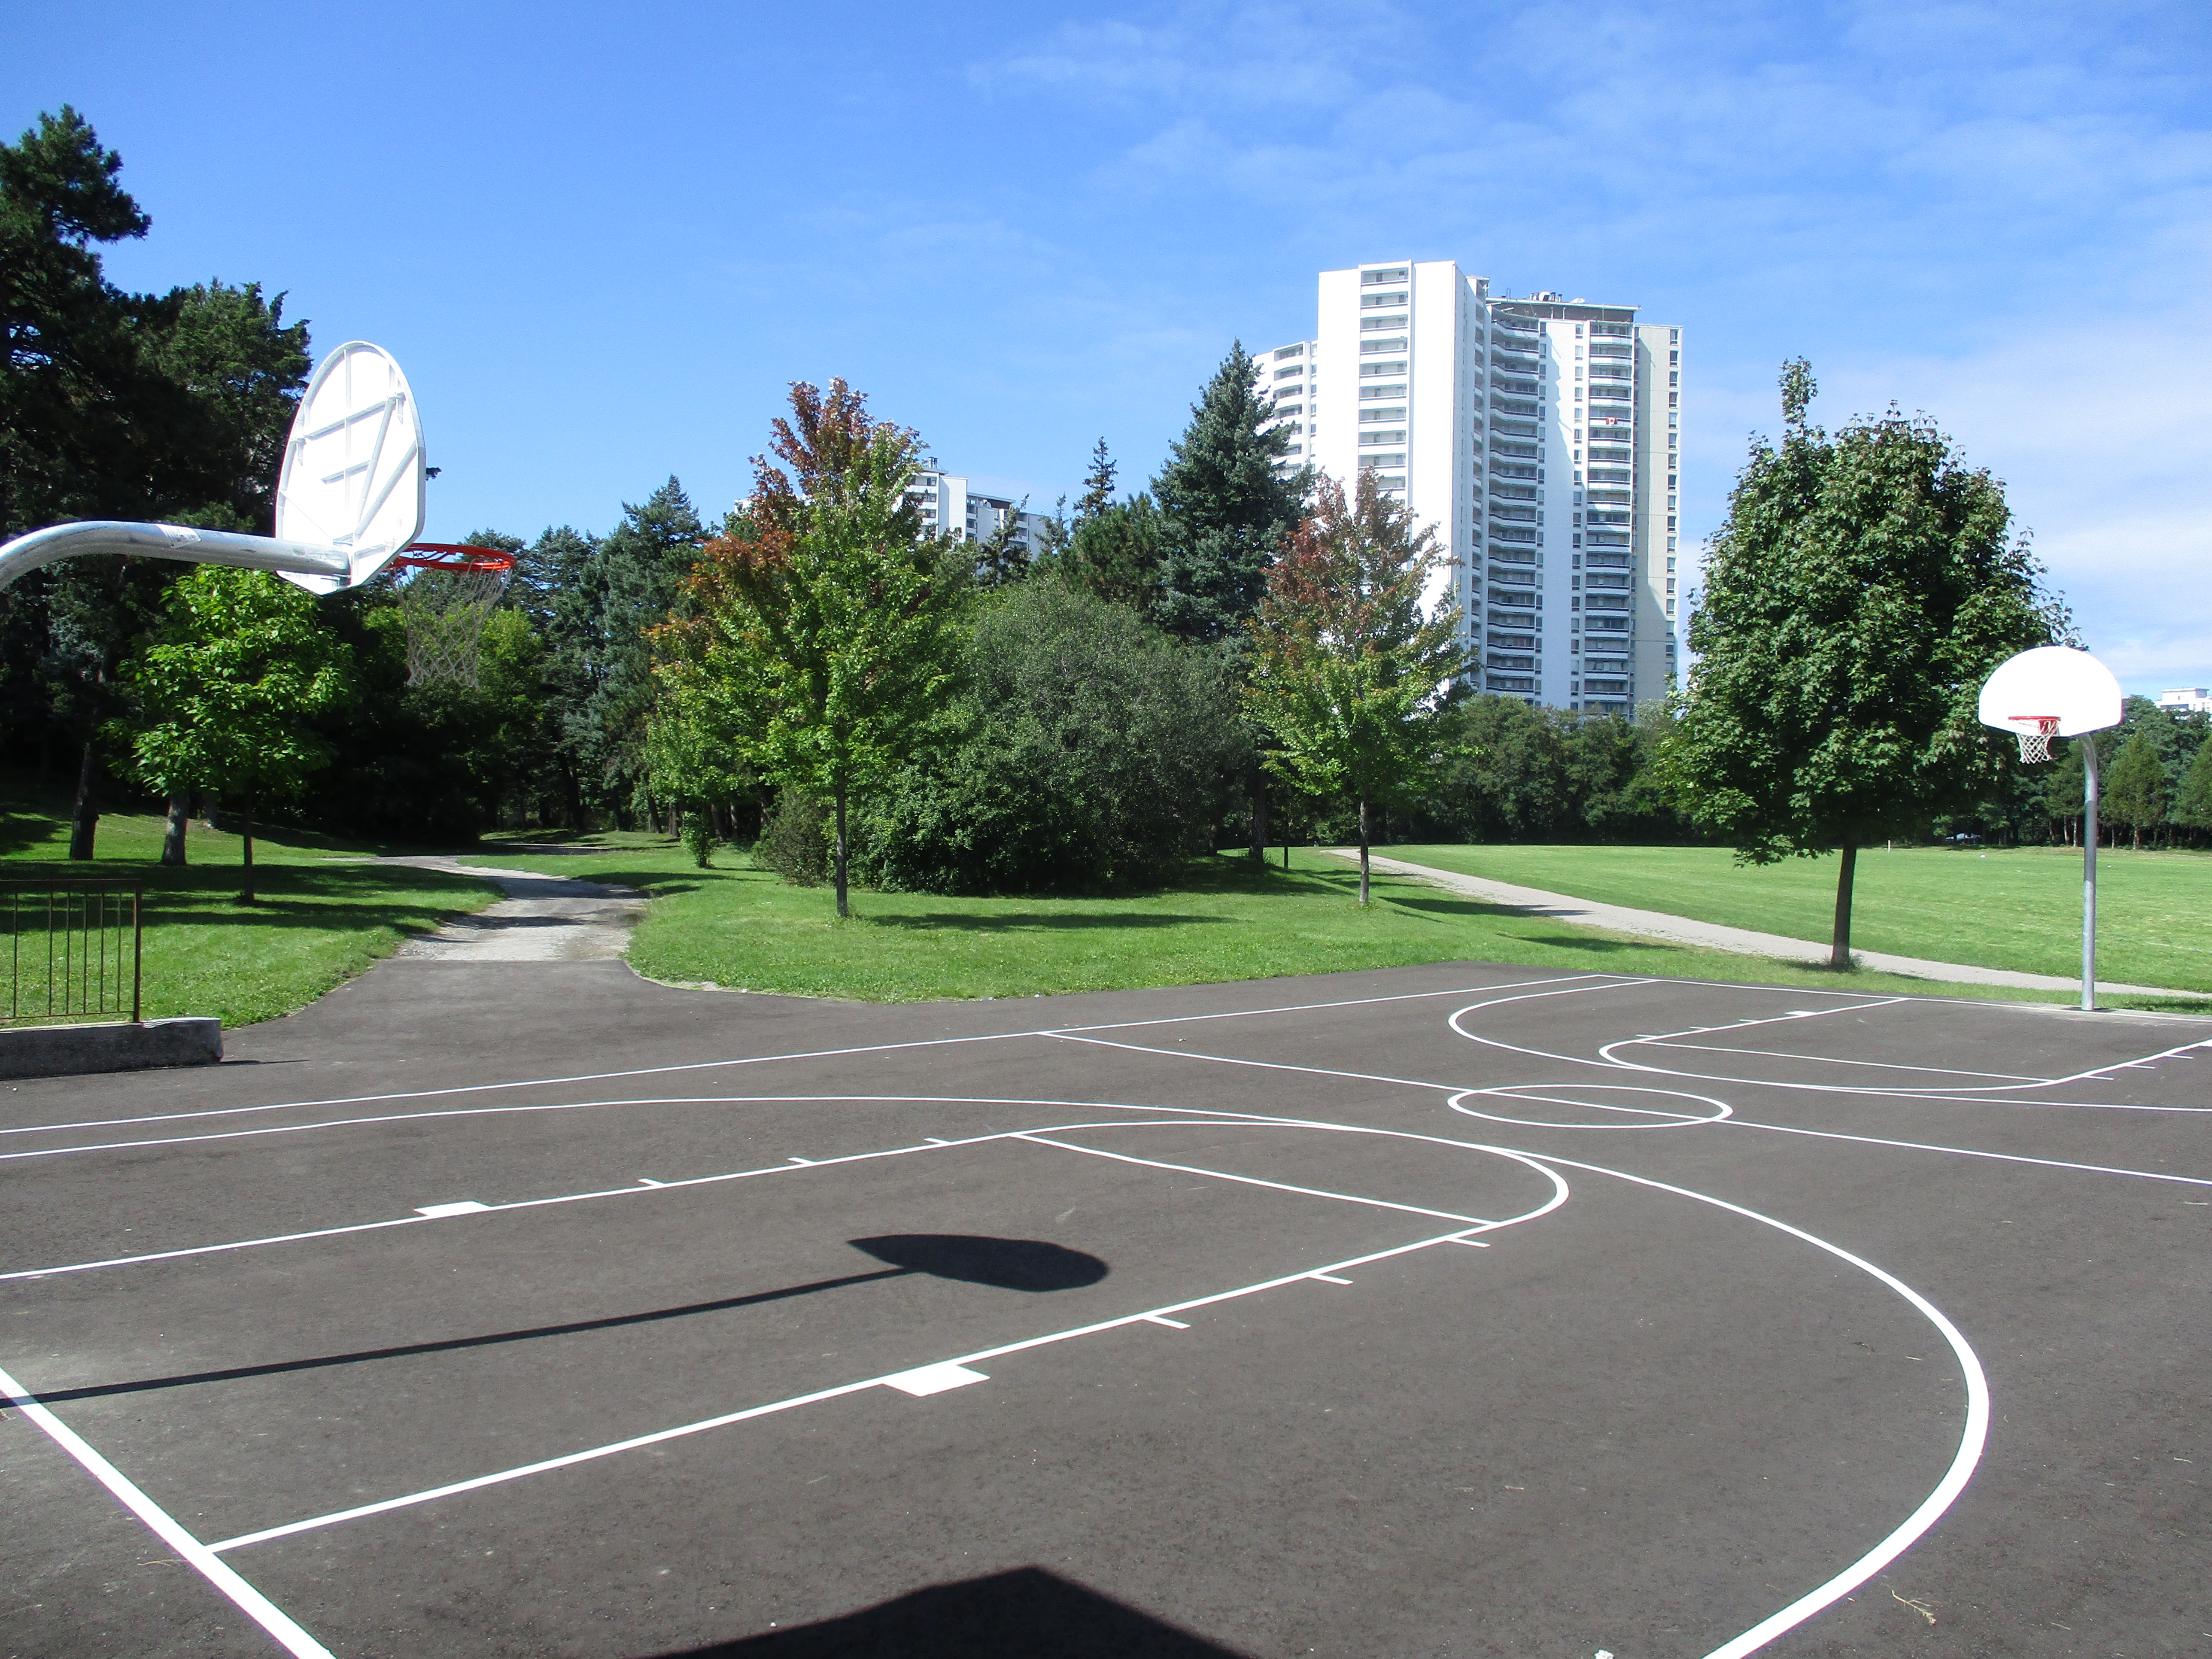 New Outdoor Basketball Court Open Gallery